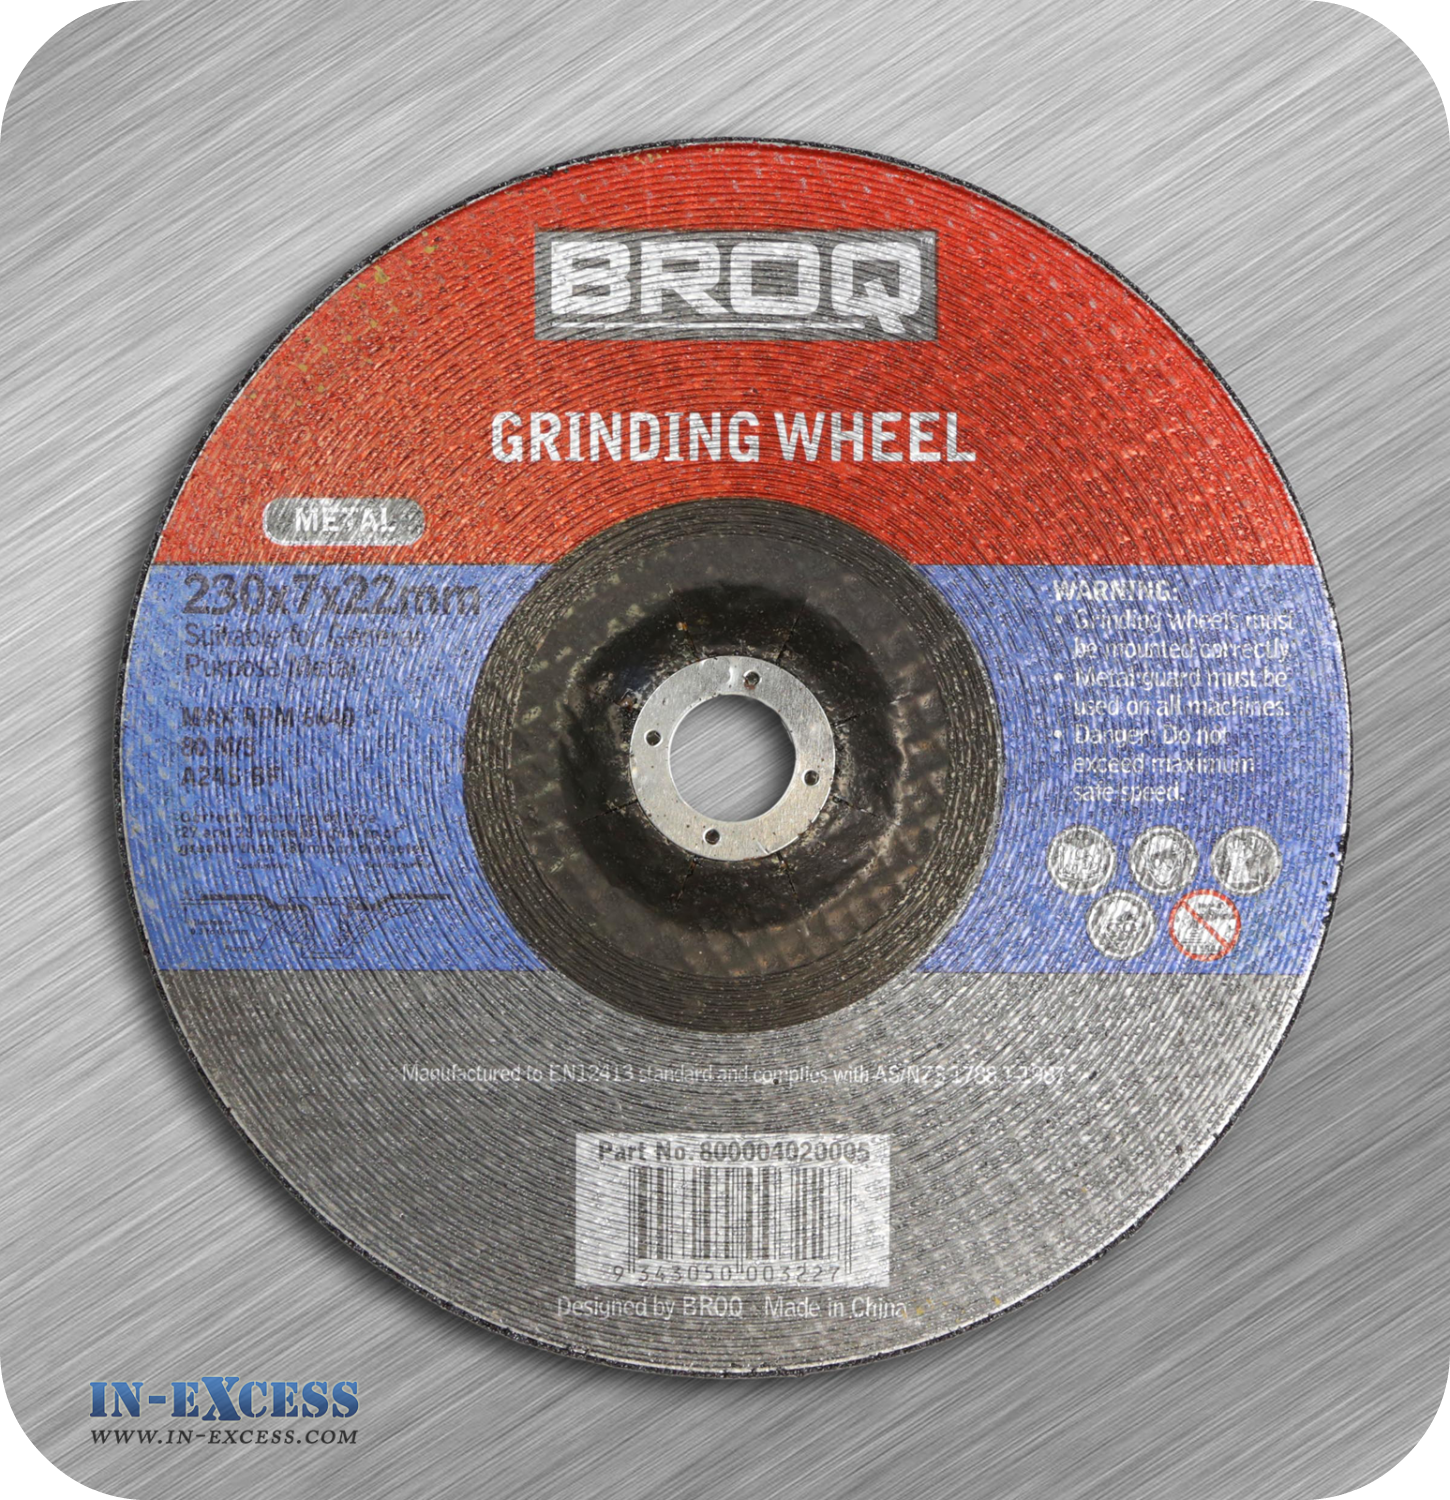 BROQ Metal Grinding Wheel Depressed Centre - 230mm